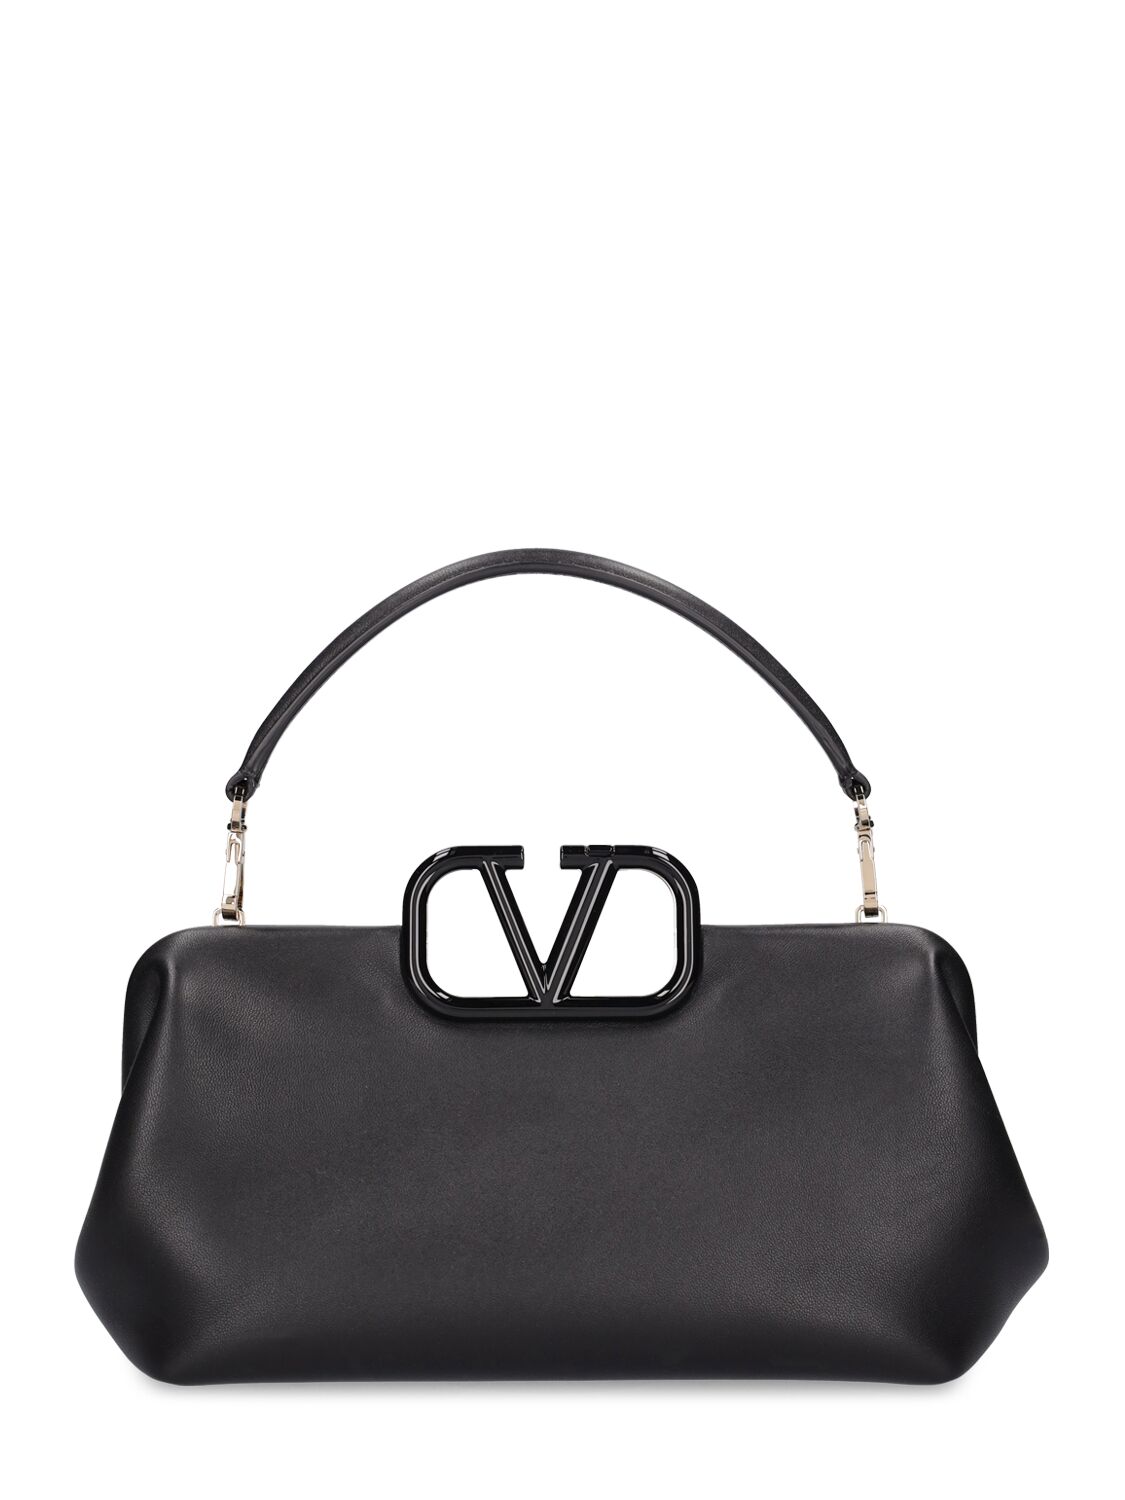 VALENTINO Divina Clutch Shoulder Bag Evening Bag Ecru White New